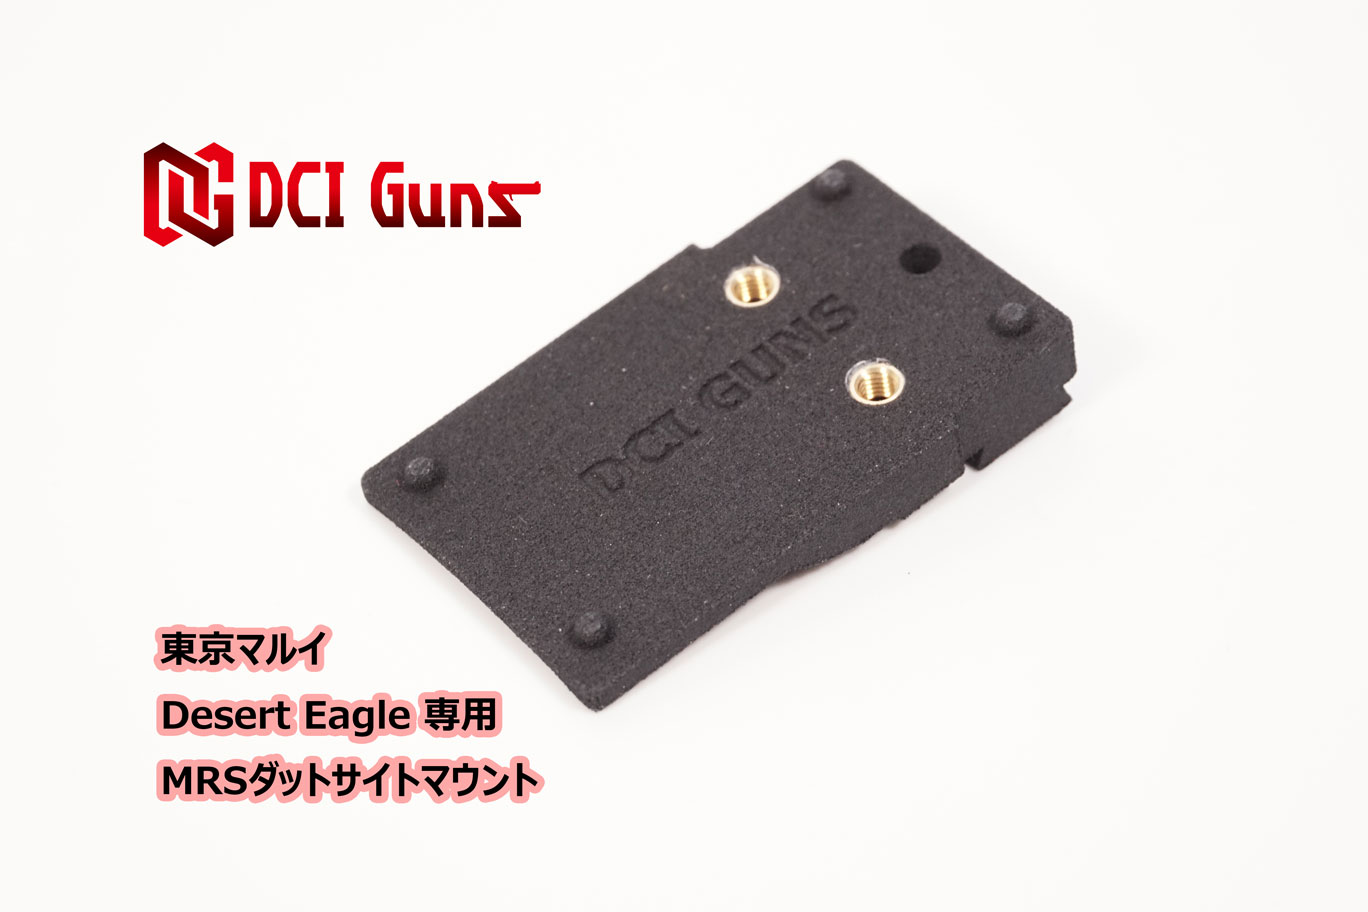 DCI Guns 東京マルイ デザートイーグル.50AE用MRSマウントV2.0 エアガン エアーガン ガスガン ブローバック カスタムパーツ ダットサイト ドットサイト 光学機器 スライド 直付け サバゲー サバイバルゲーム desert eagle